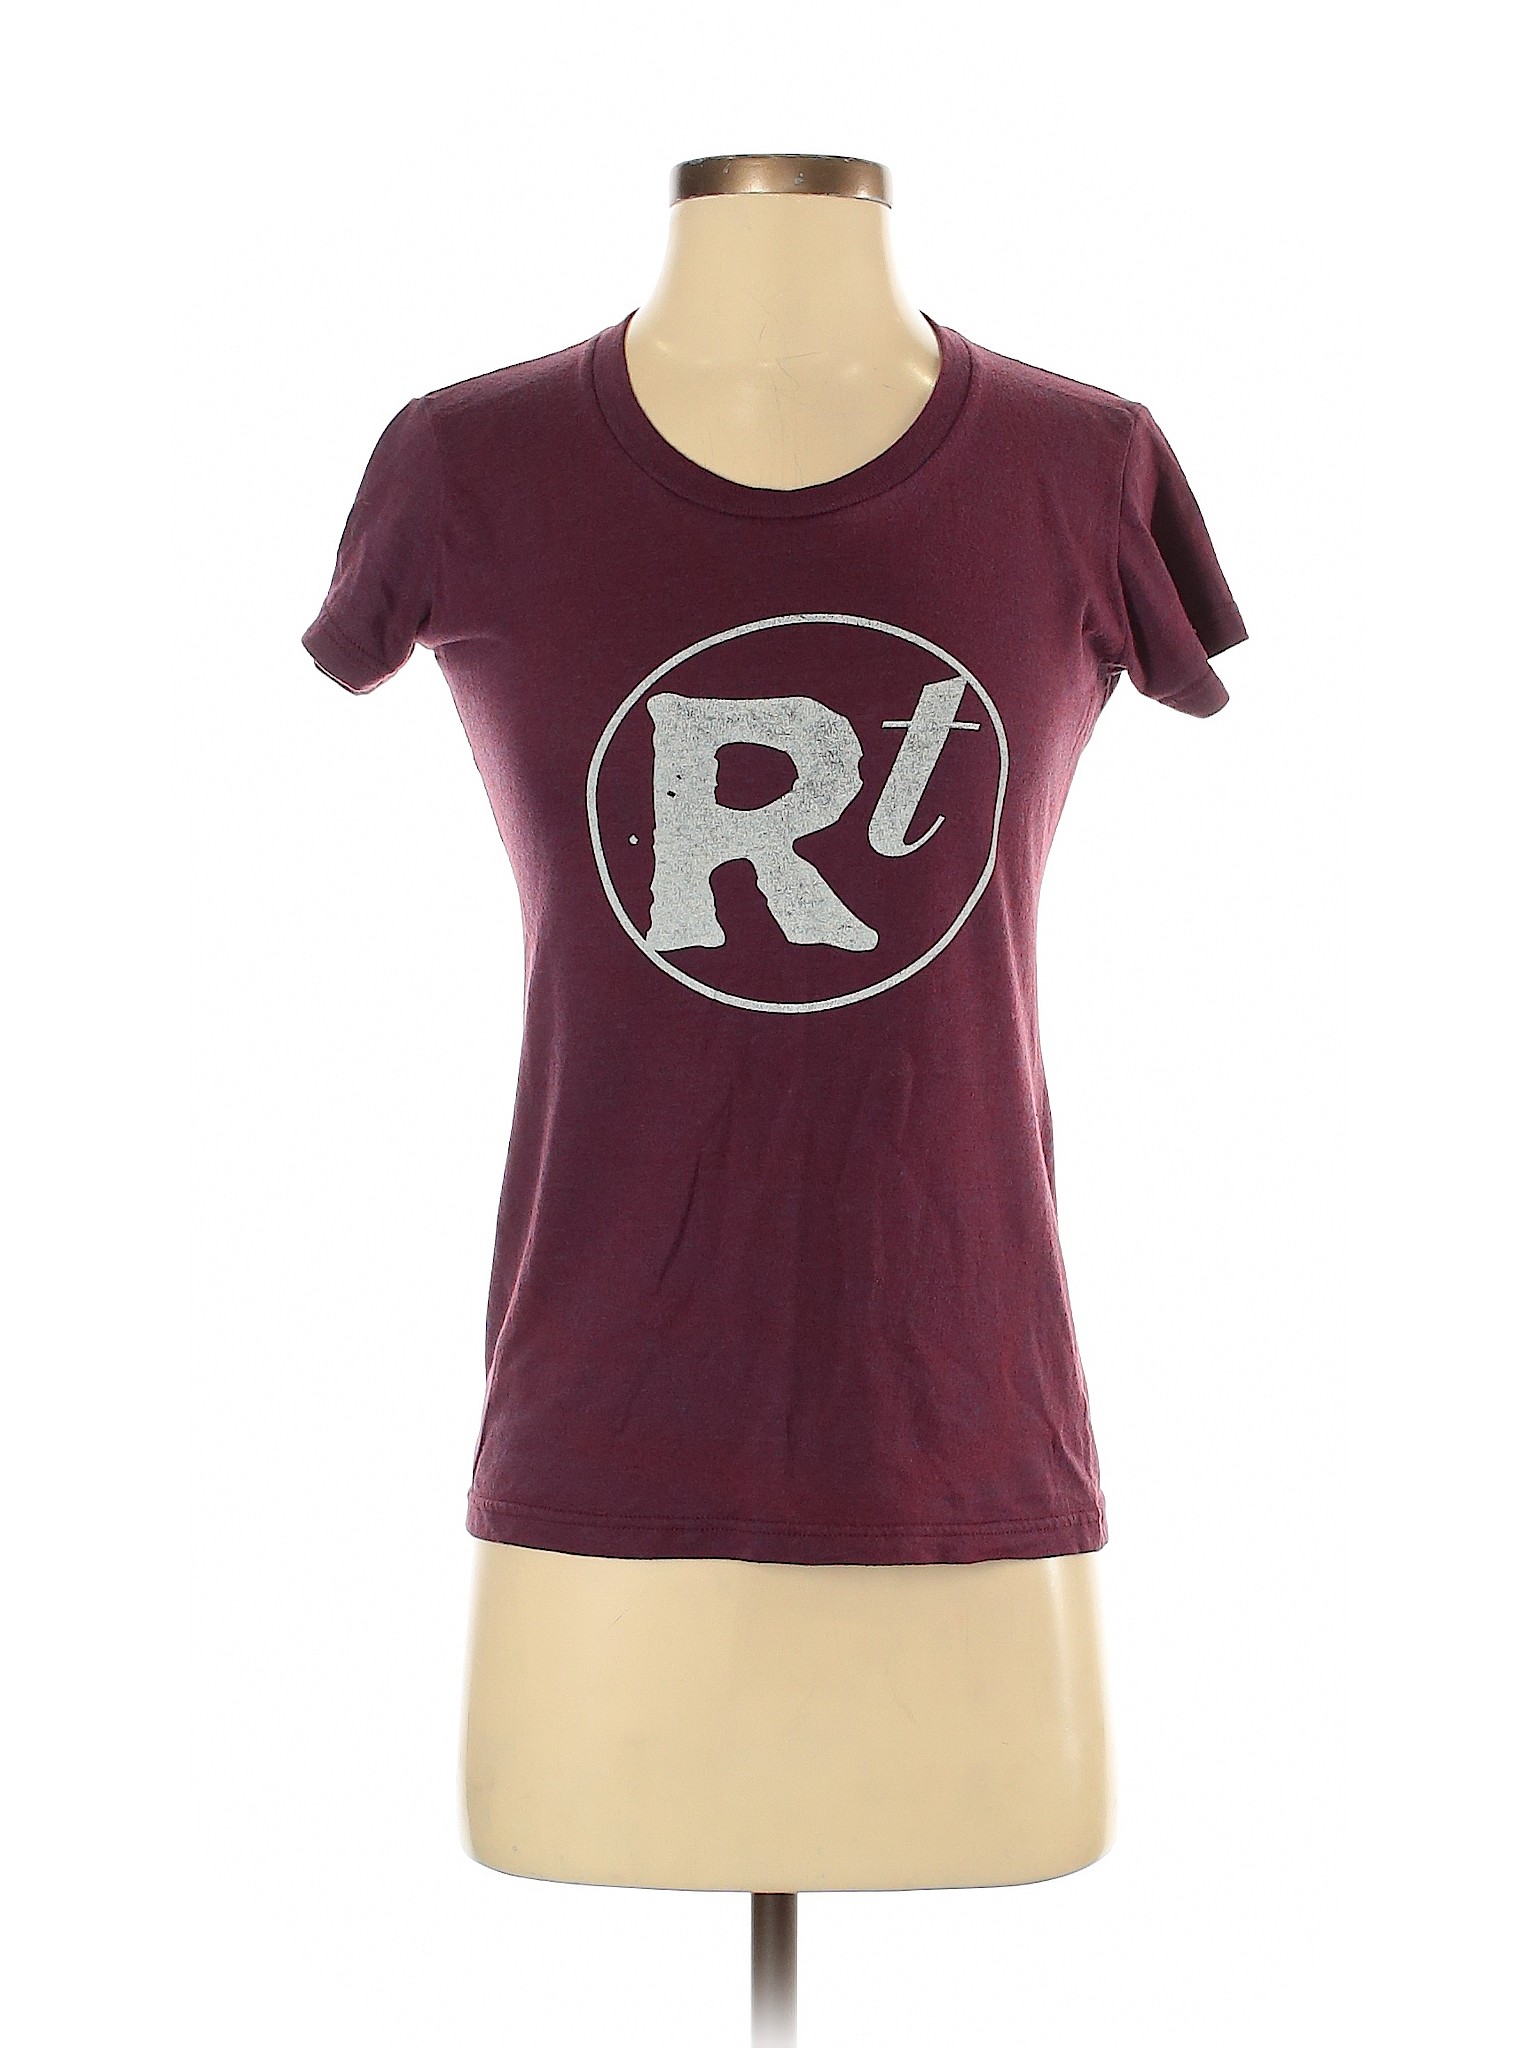 Download Rt Women Purple Short Sleeve T-Shirt S | eBay